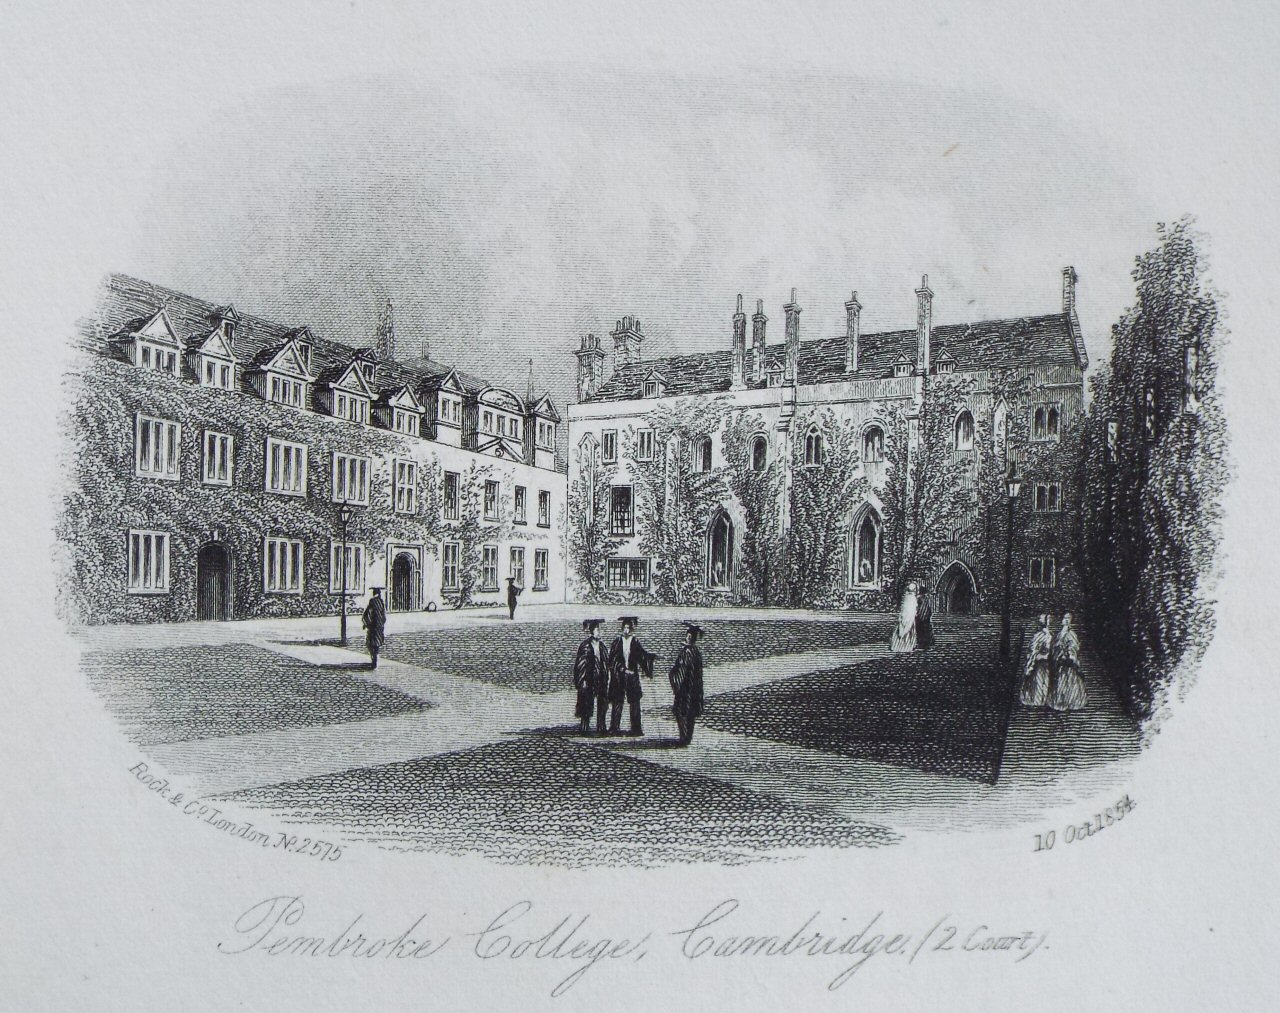 Steel Vignette - Pembroke College, Cambridge. (2 Court.) - Rock